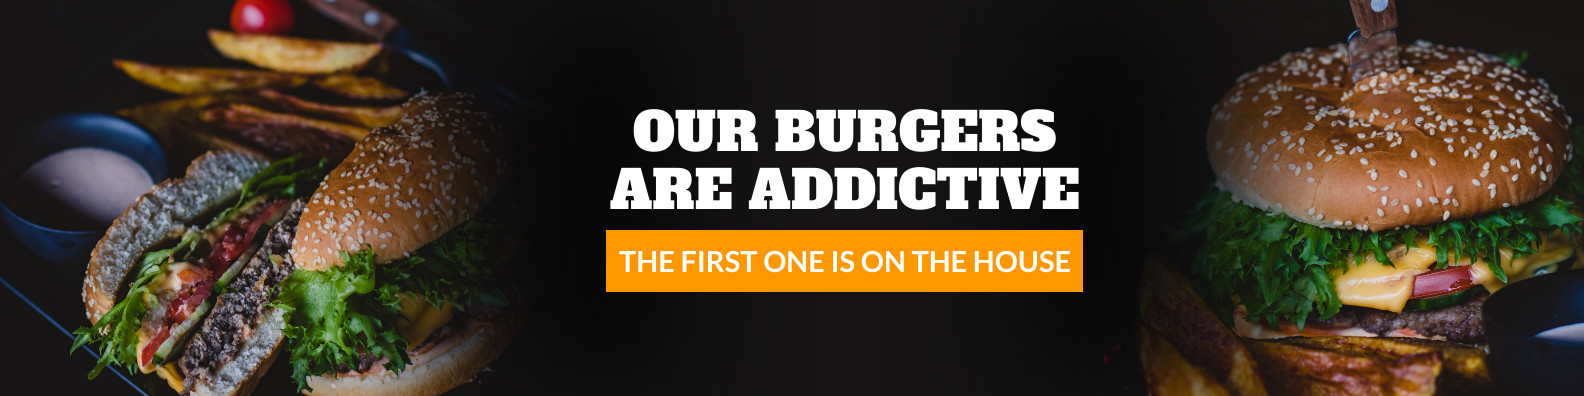 Our Burgers Are Addictive Linkedin Profile BG